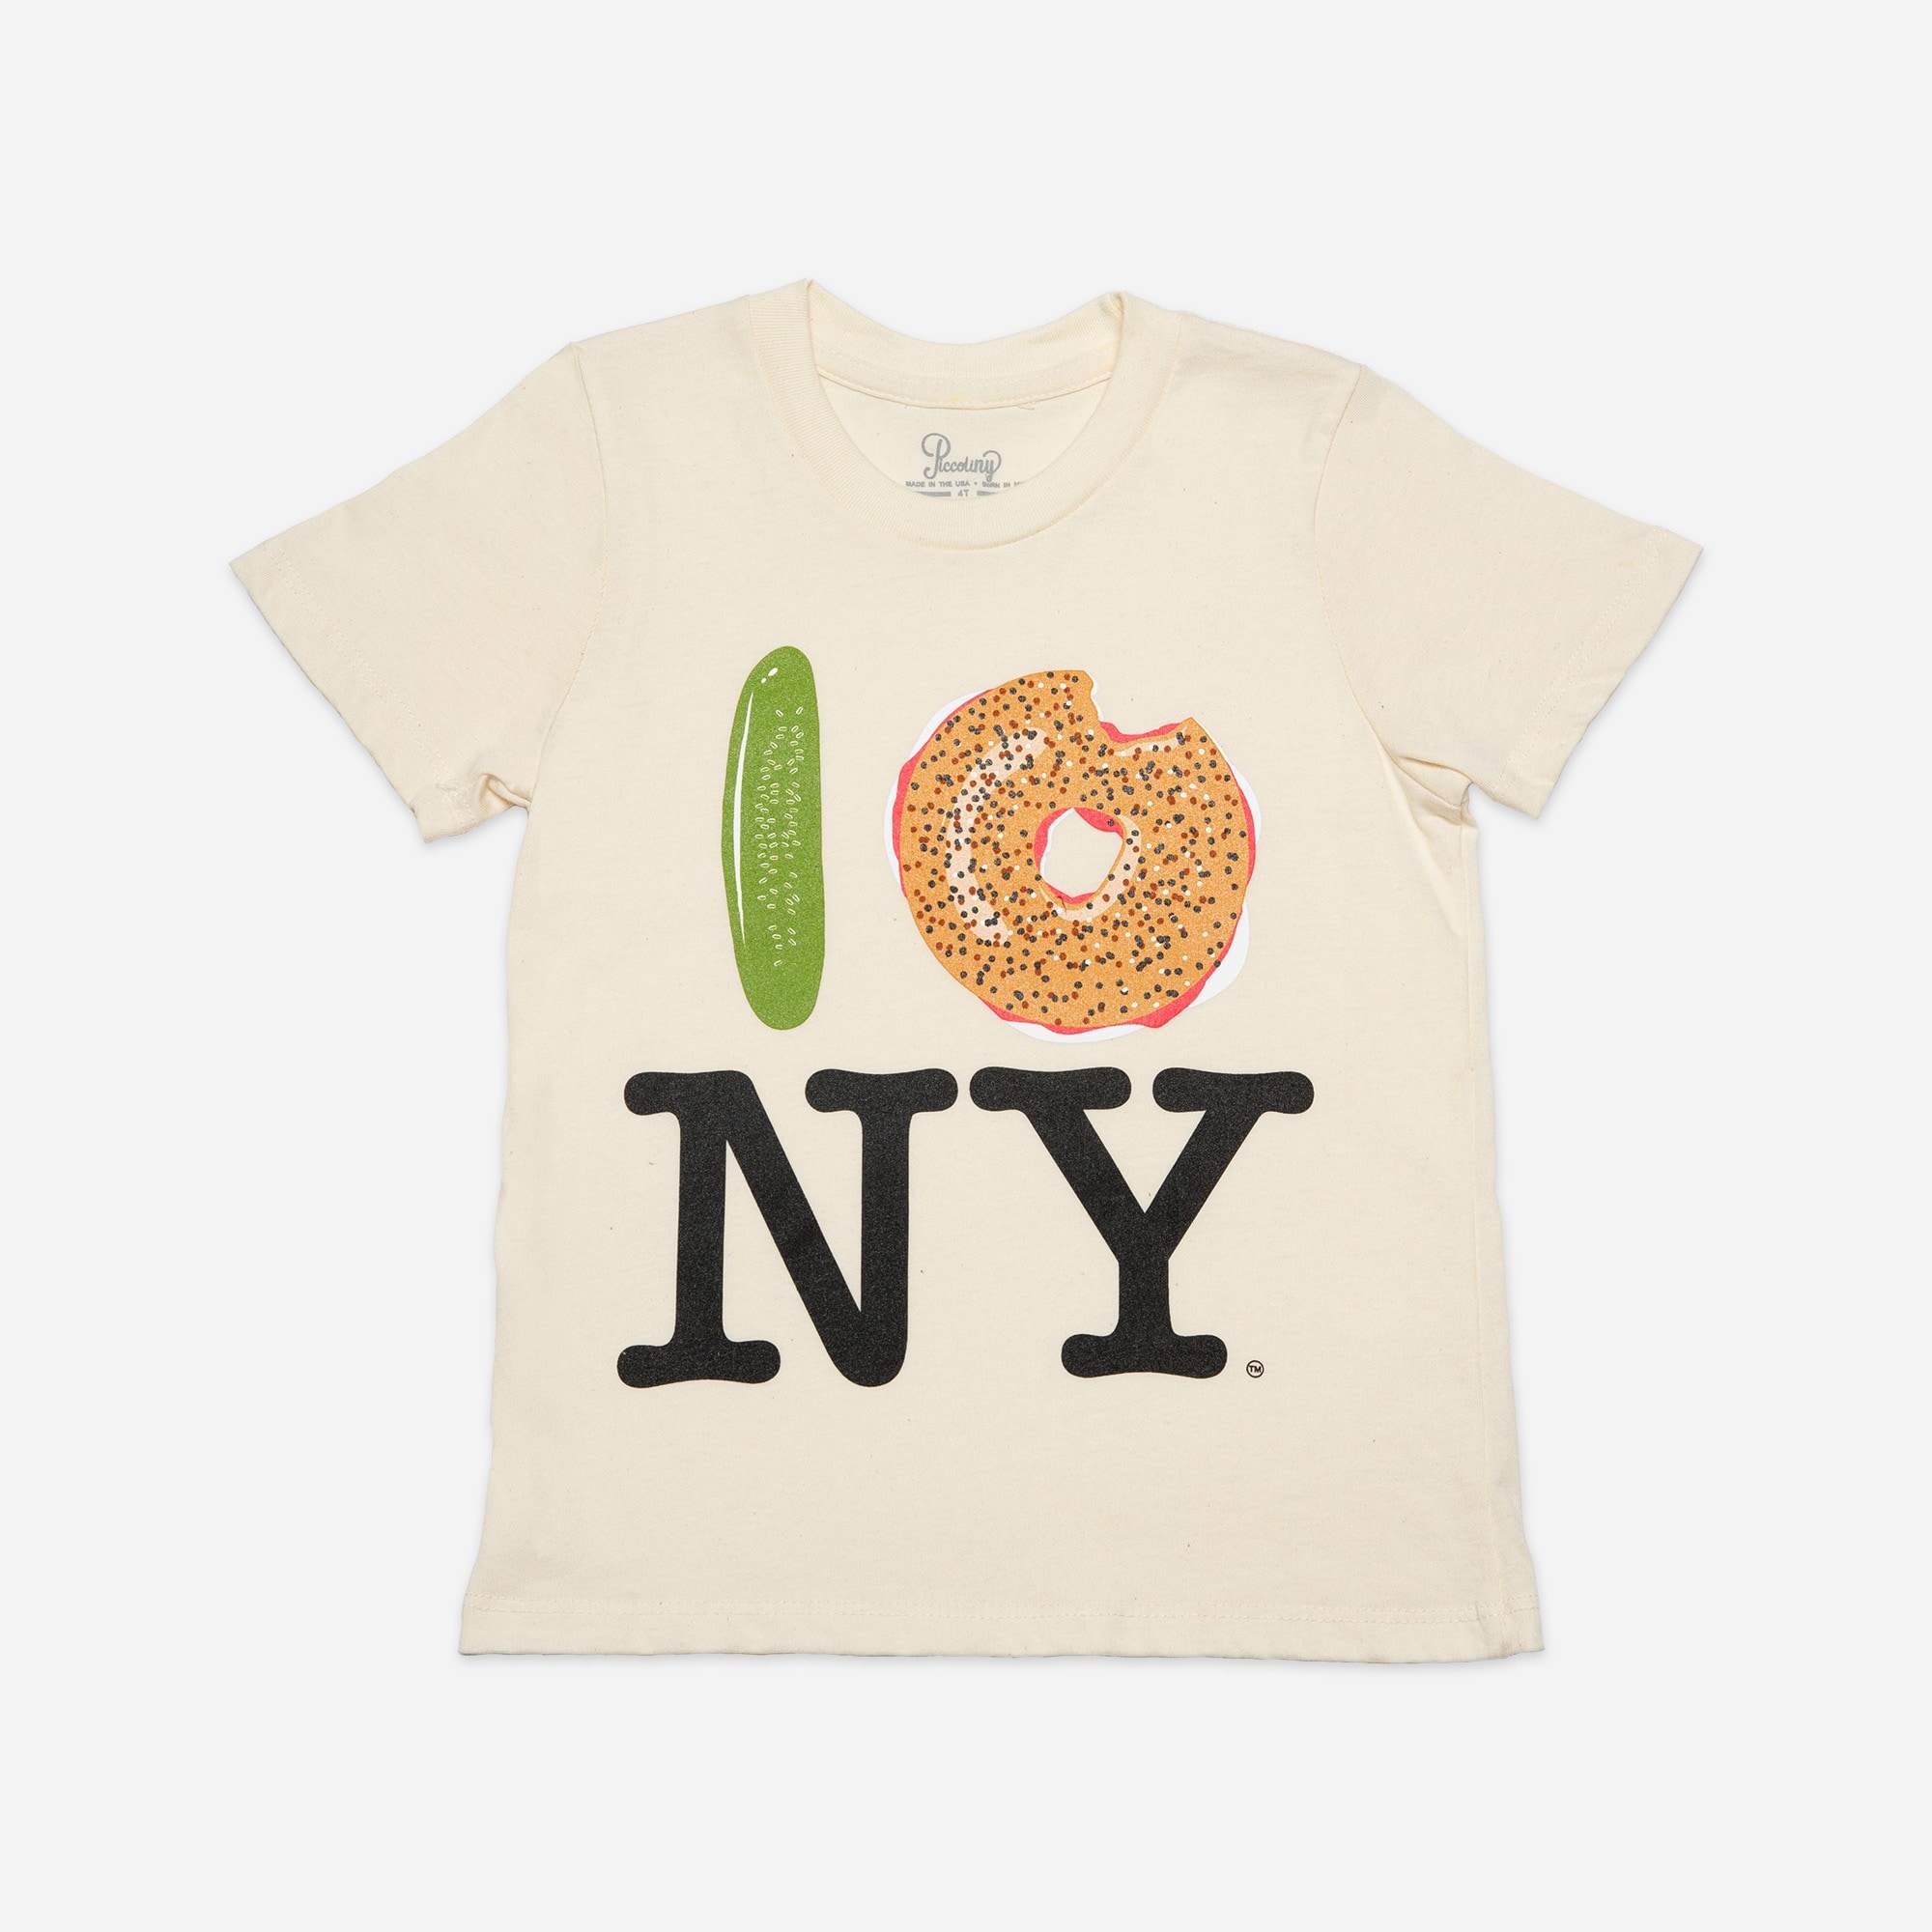 Jcrew PiccoliNY pickle bagel NY T-shirt